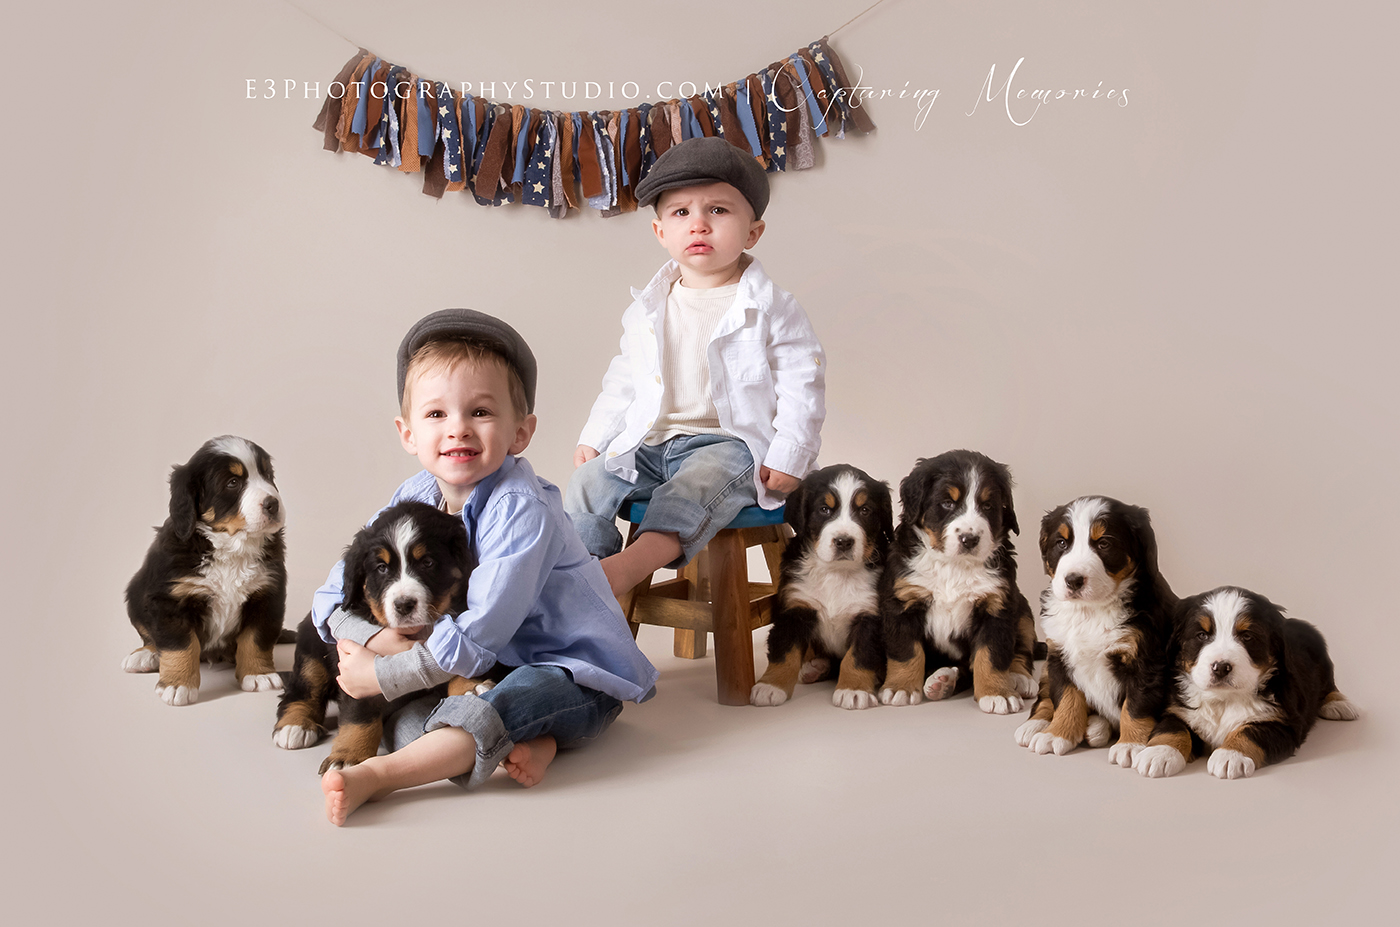 E3 Photography Studio. Nebraska Baby Child Photographer | Central Nebraska Pet Photography | Hastings NE Portrait Studio Artist 